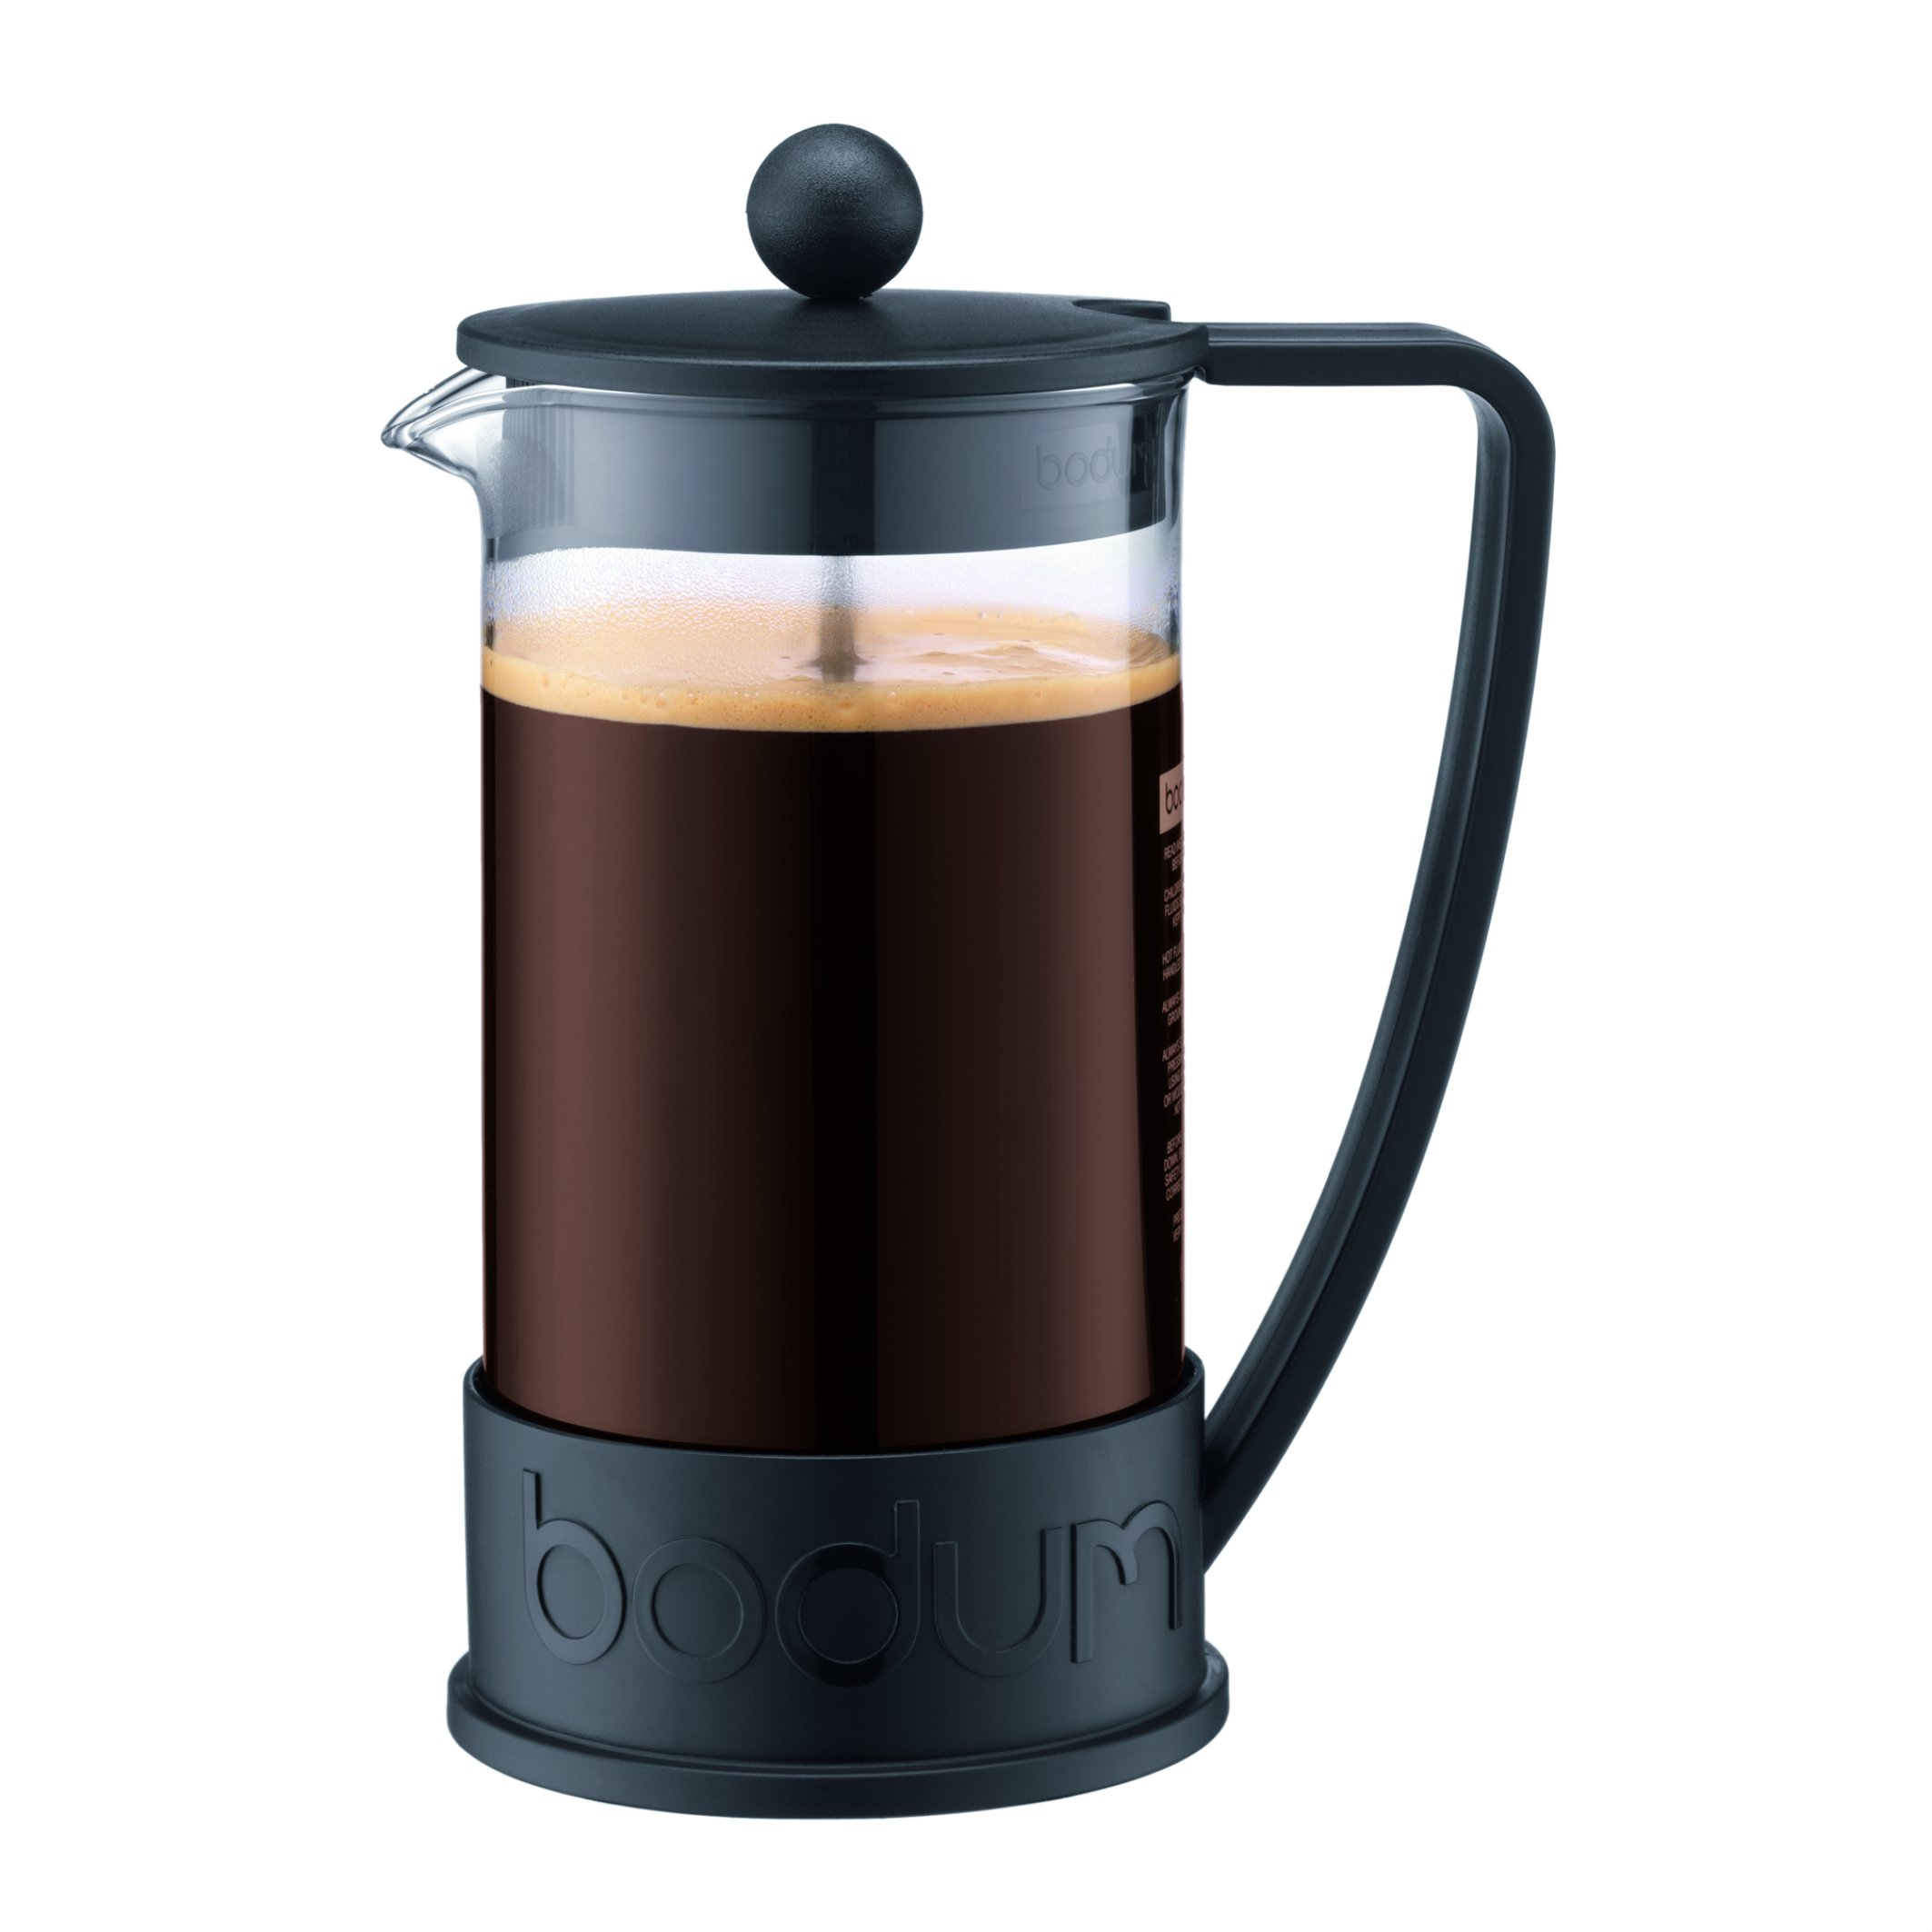 34-Oz Bodum Brazil French Press Coffee & Tea Maker (Black) $12 + Free Shipping w/ Prime or $35+